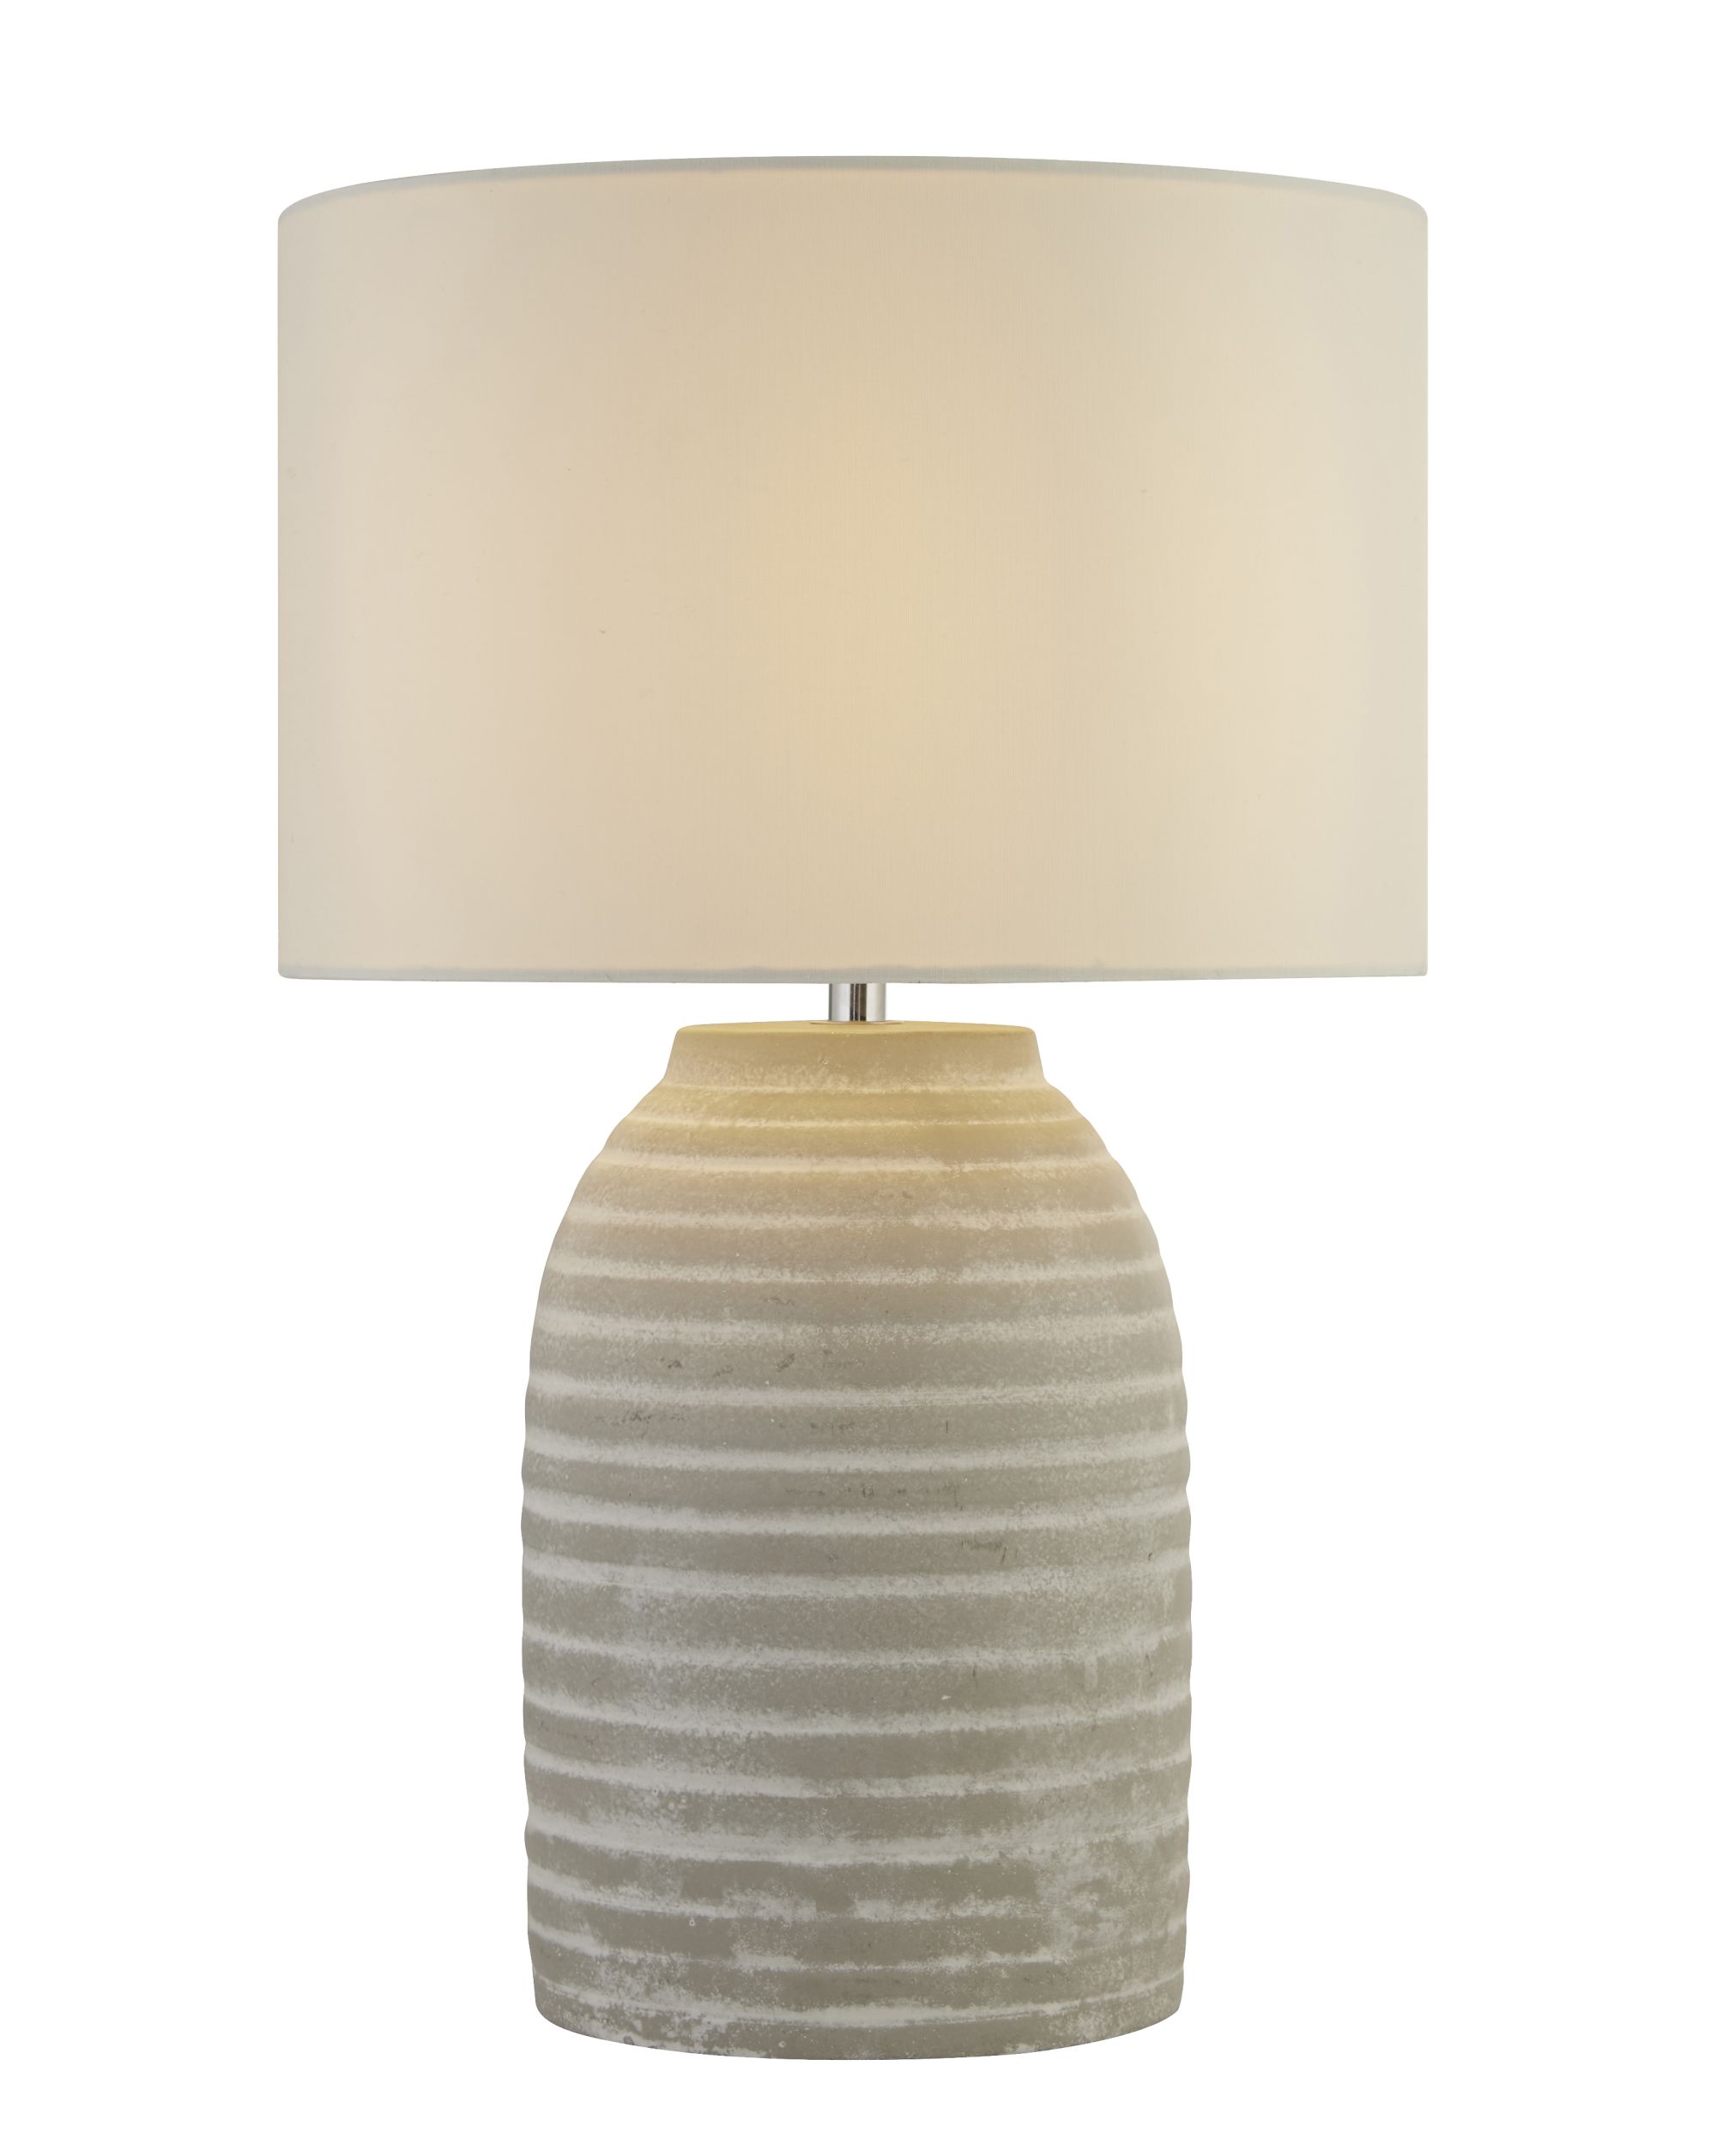 x Rib Table Lamp - Grey/White Ceramic & White Shade